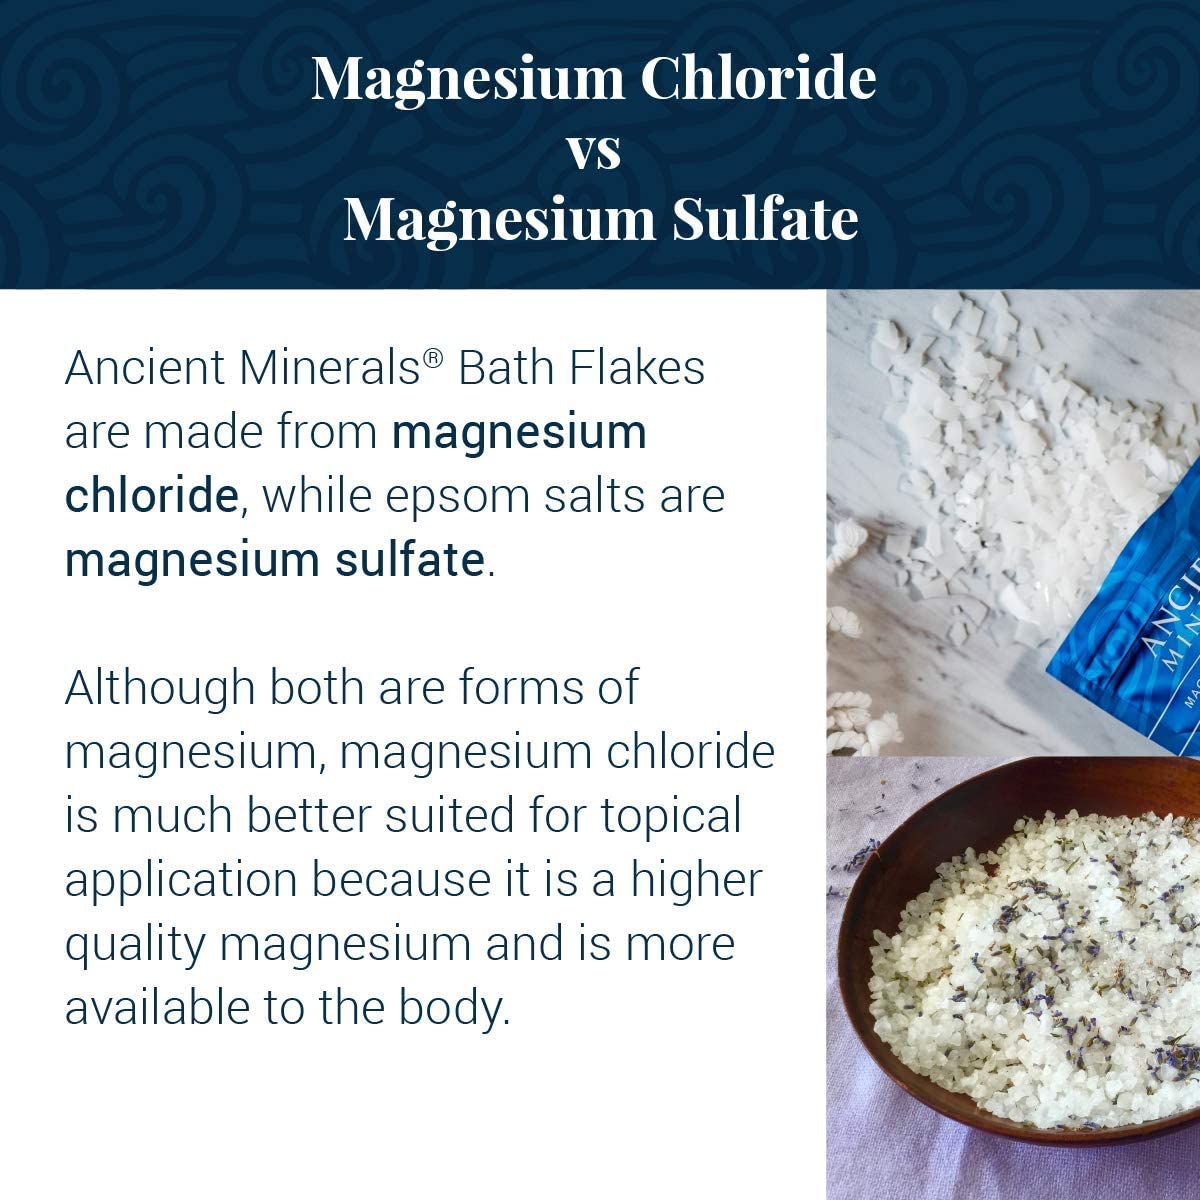 Magnesium Bath Flakes